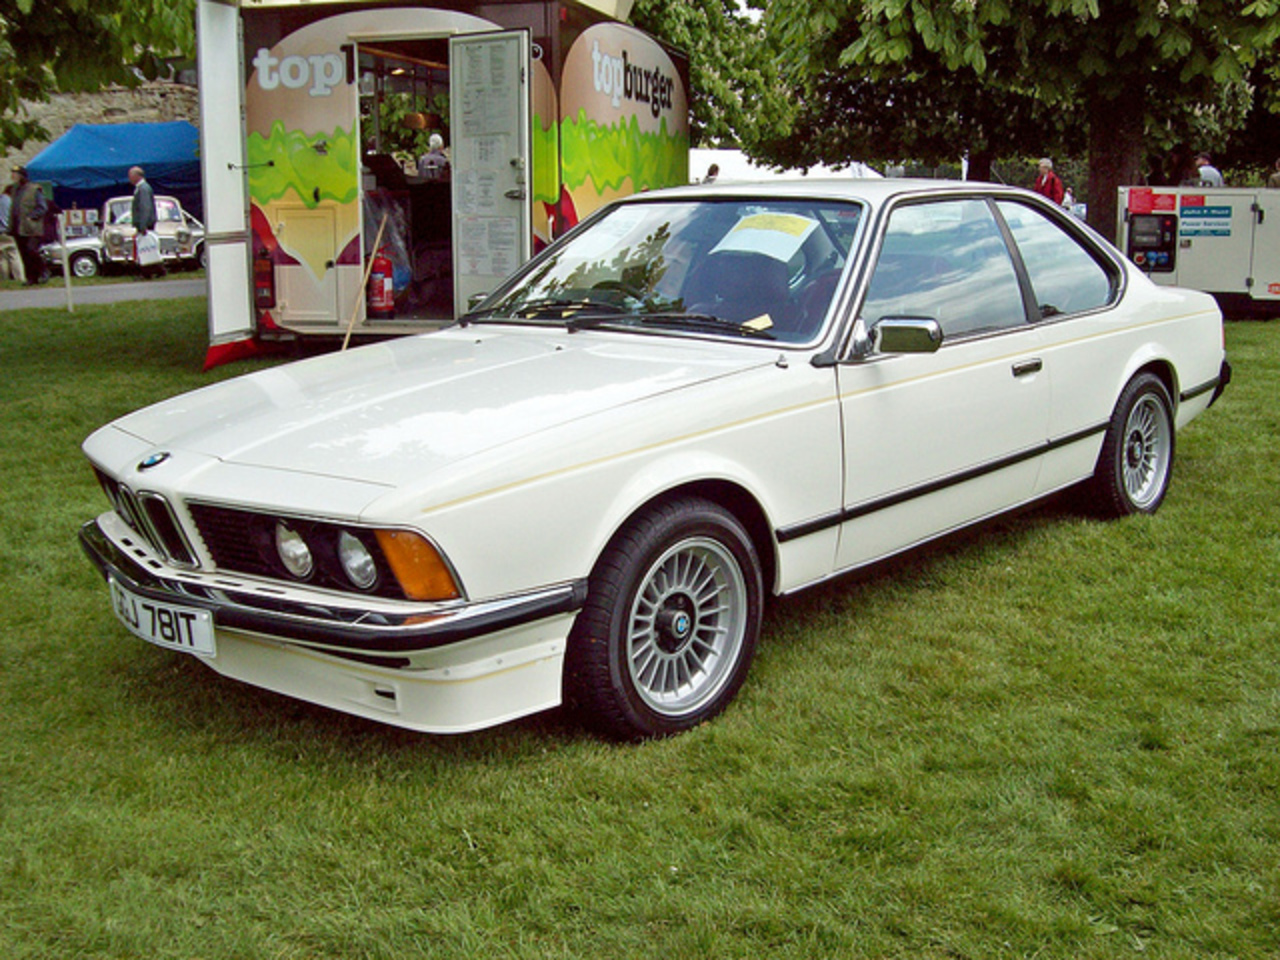 444 BMW E24 633 CSi Auto (1979) | Flickr - Photo Sharing!